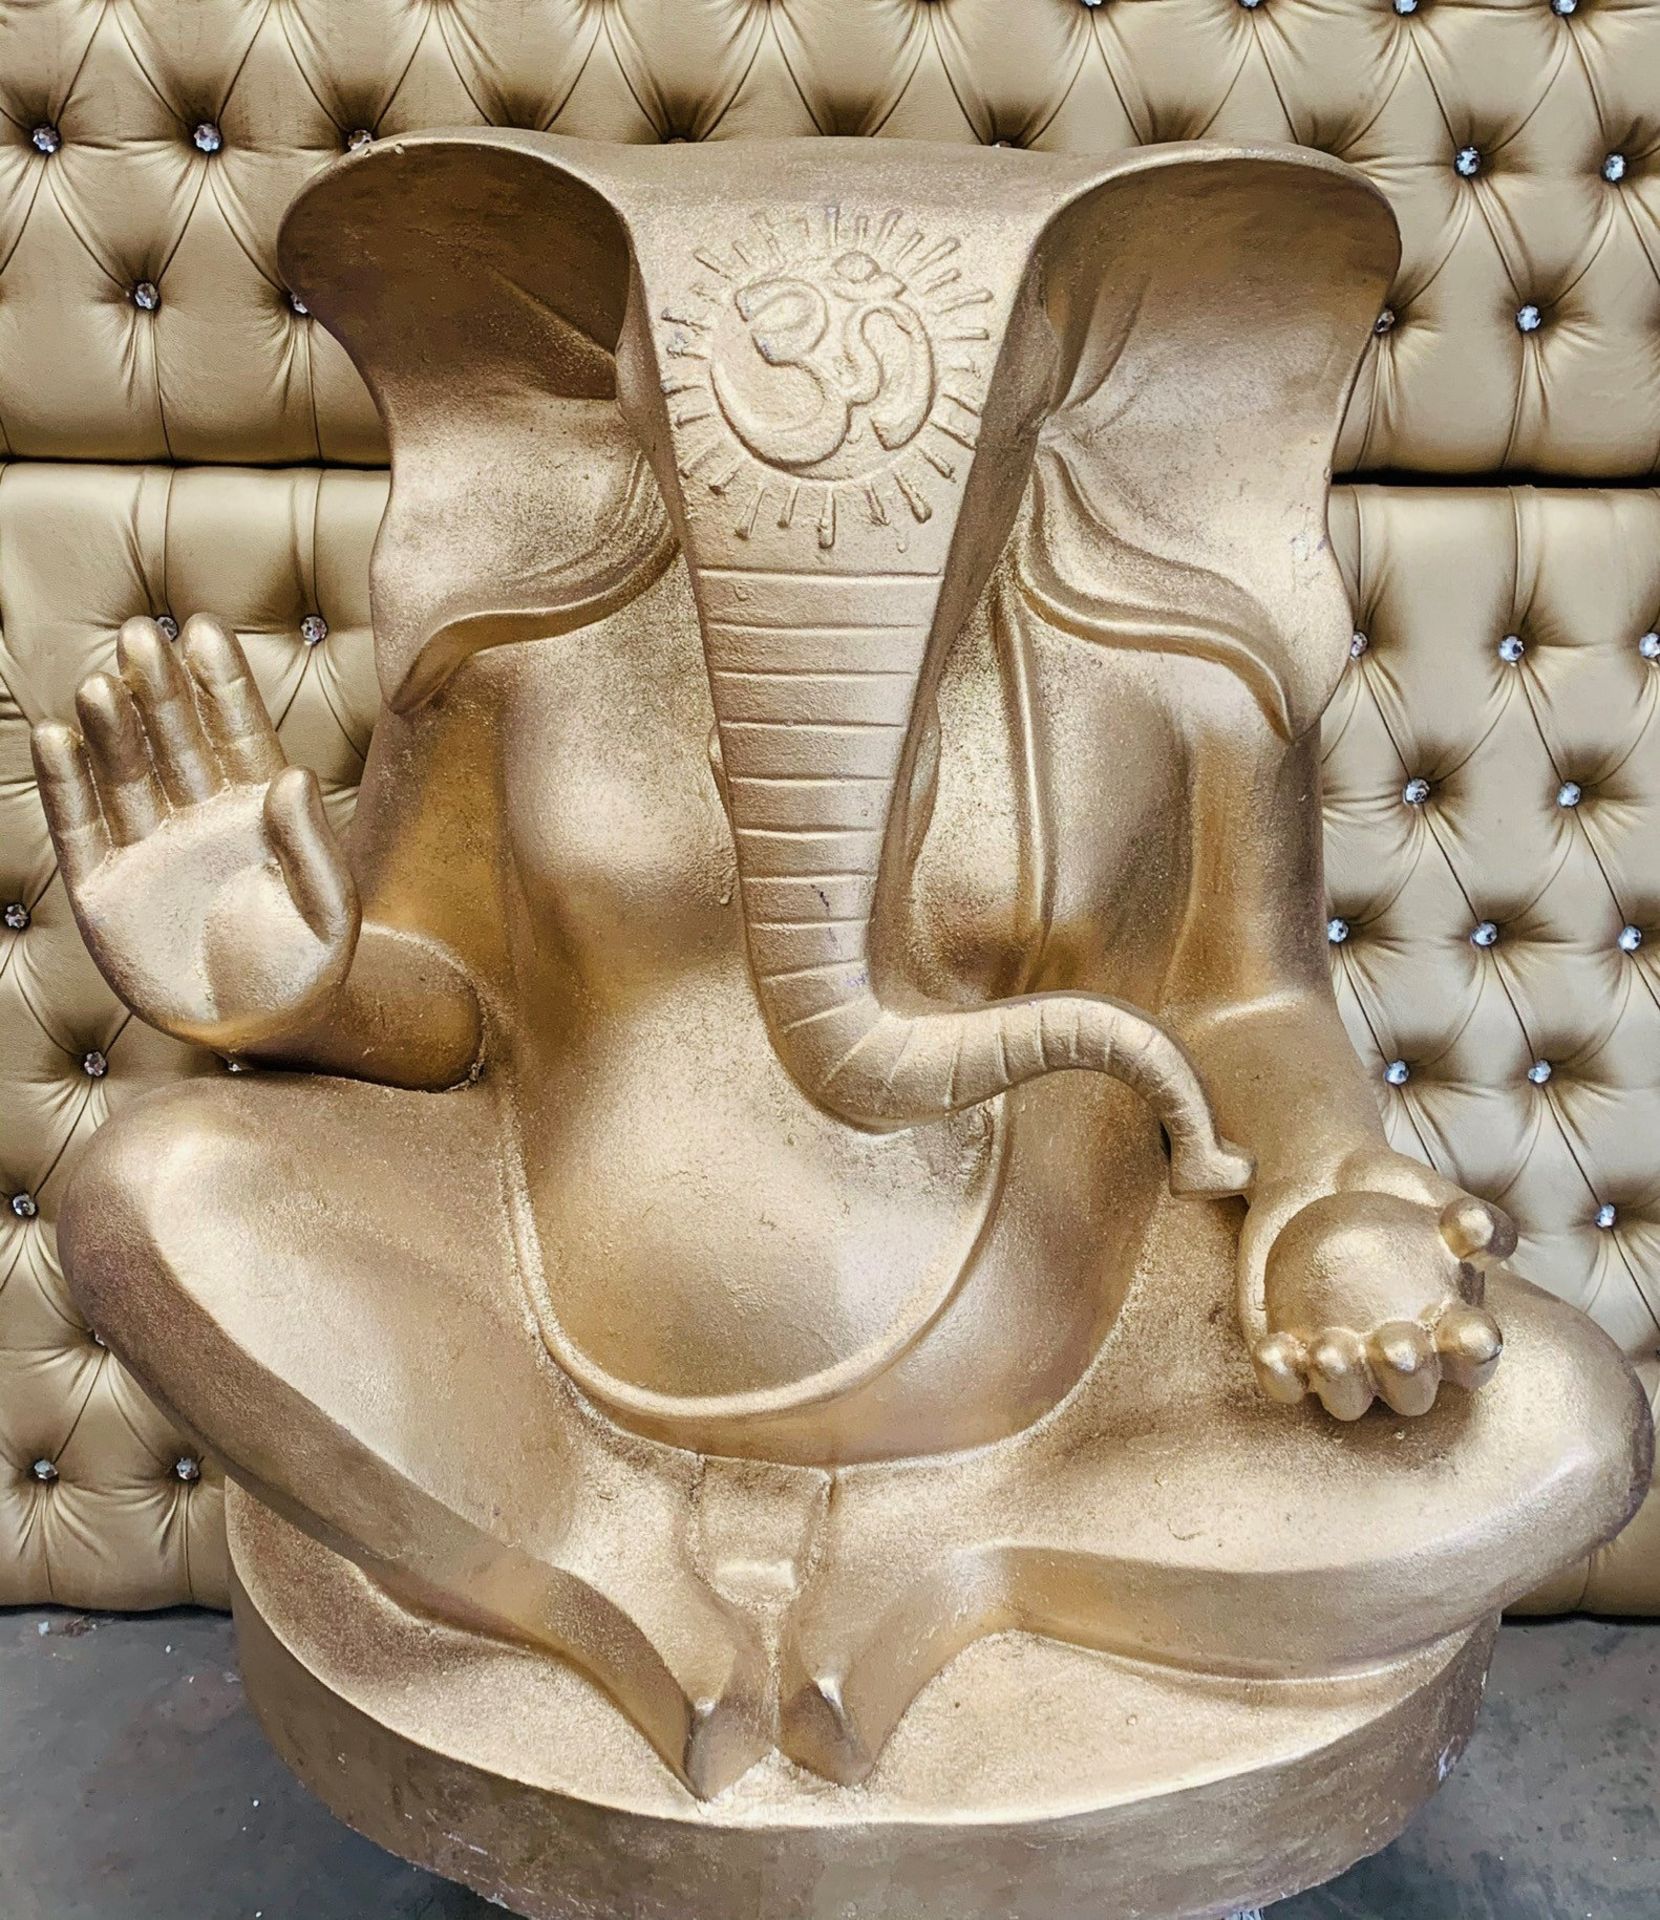 1 x Large Fibreglass Ganesh Statue - Dimensions: 102cm x 98cm